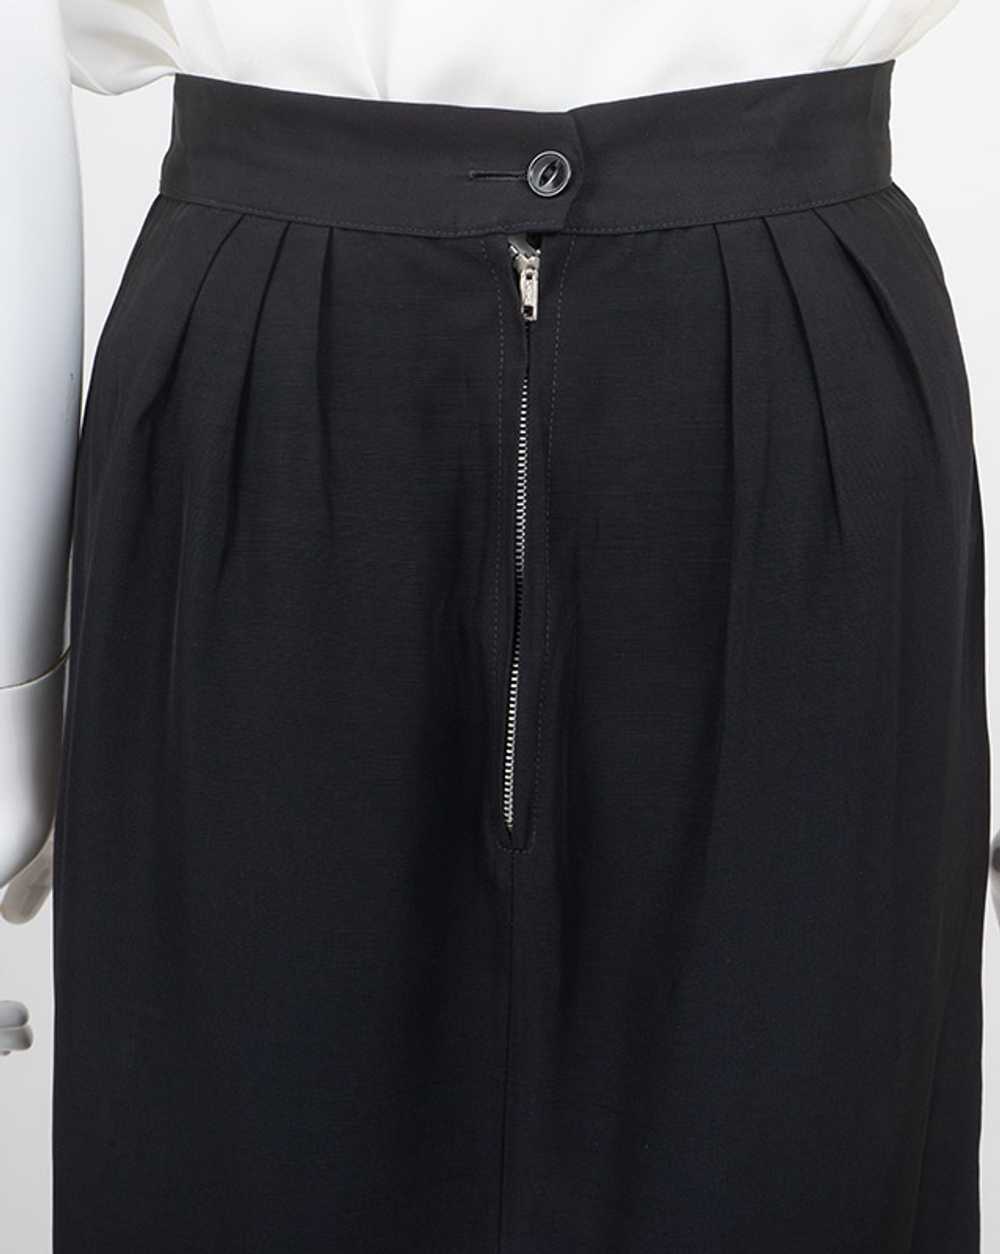 1950s Black Satin Pencil Skirt w/ Tiered Pleats - image 3